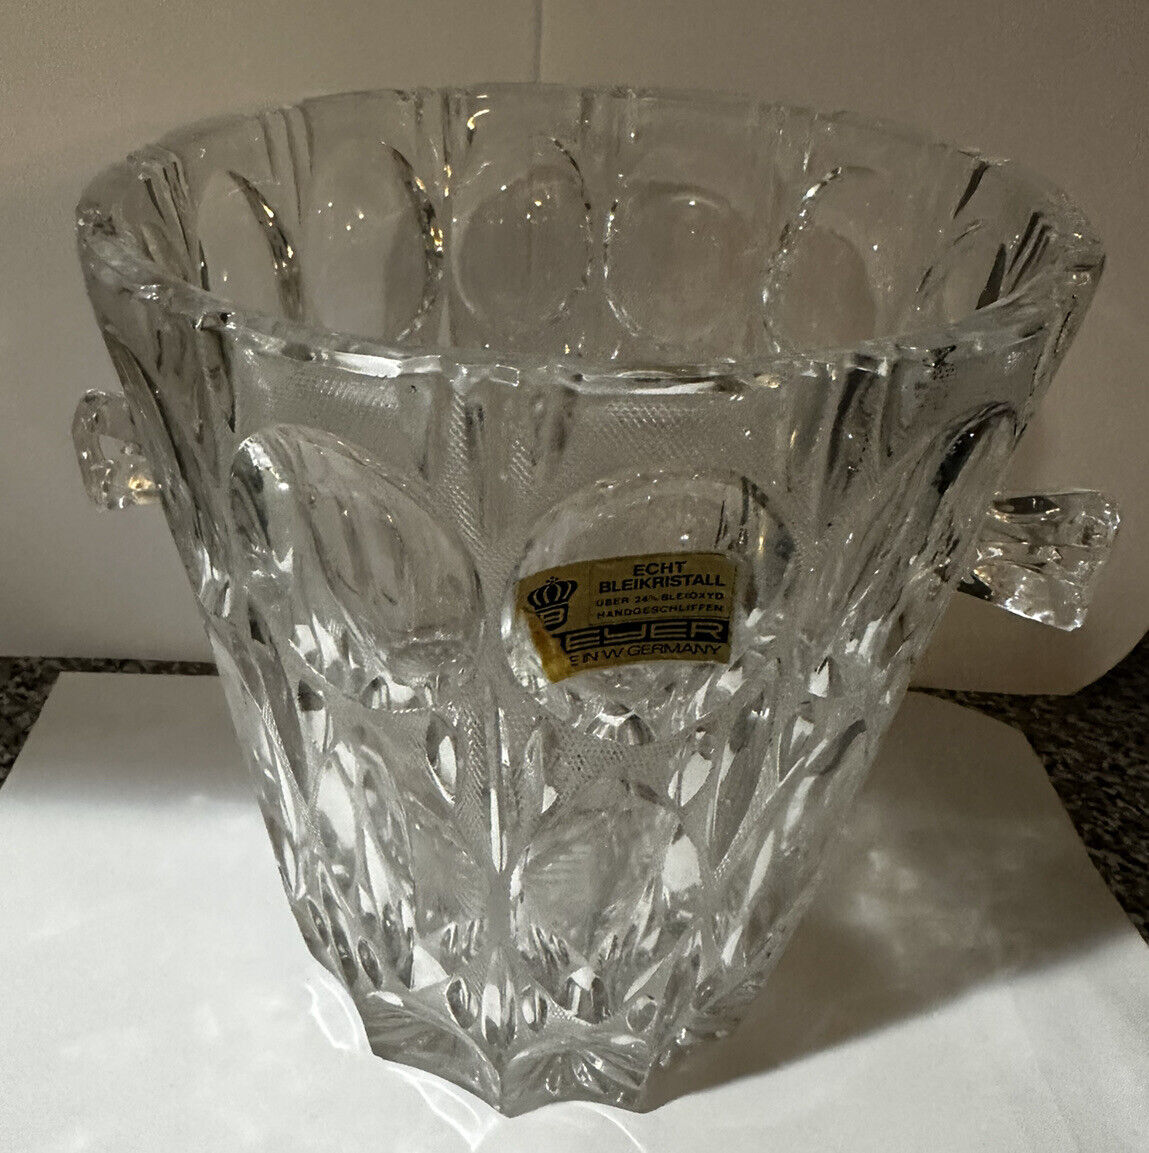 vtg Bleikristall German Beyer 24% Lead Crystal Echt Cut Ice Bucket approx 9”H